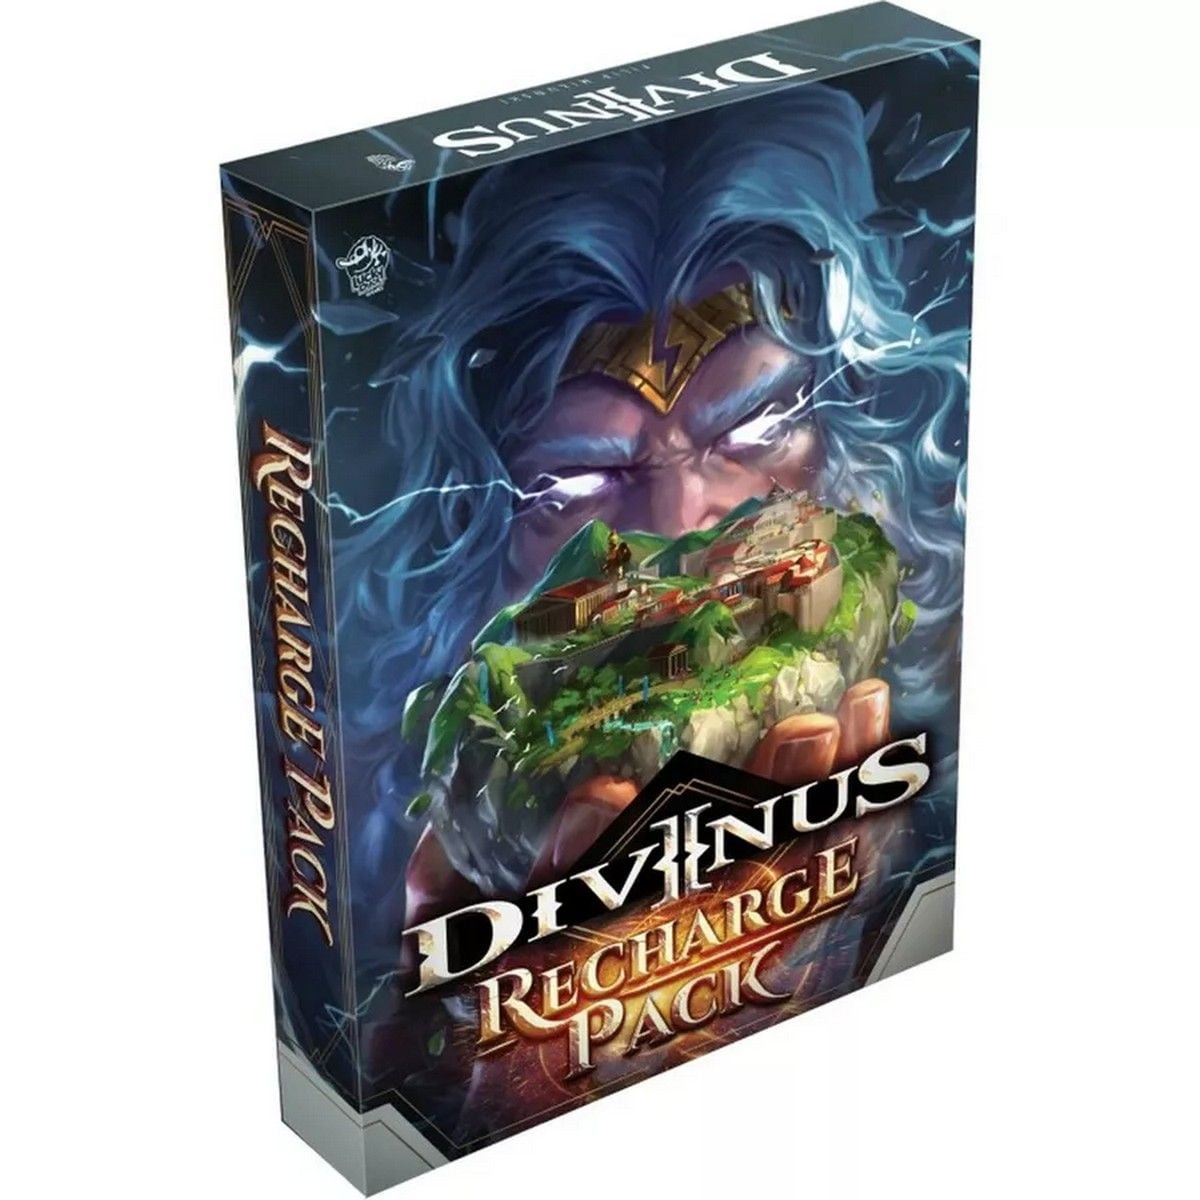 Divinus - Recharge Pack